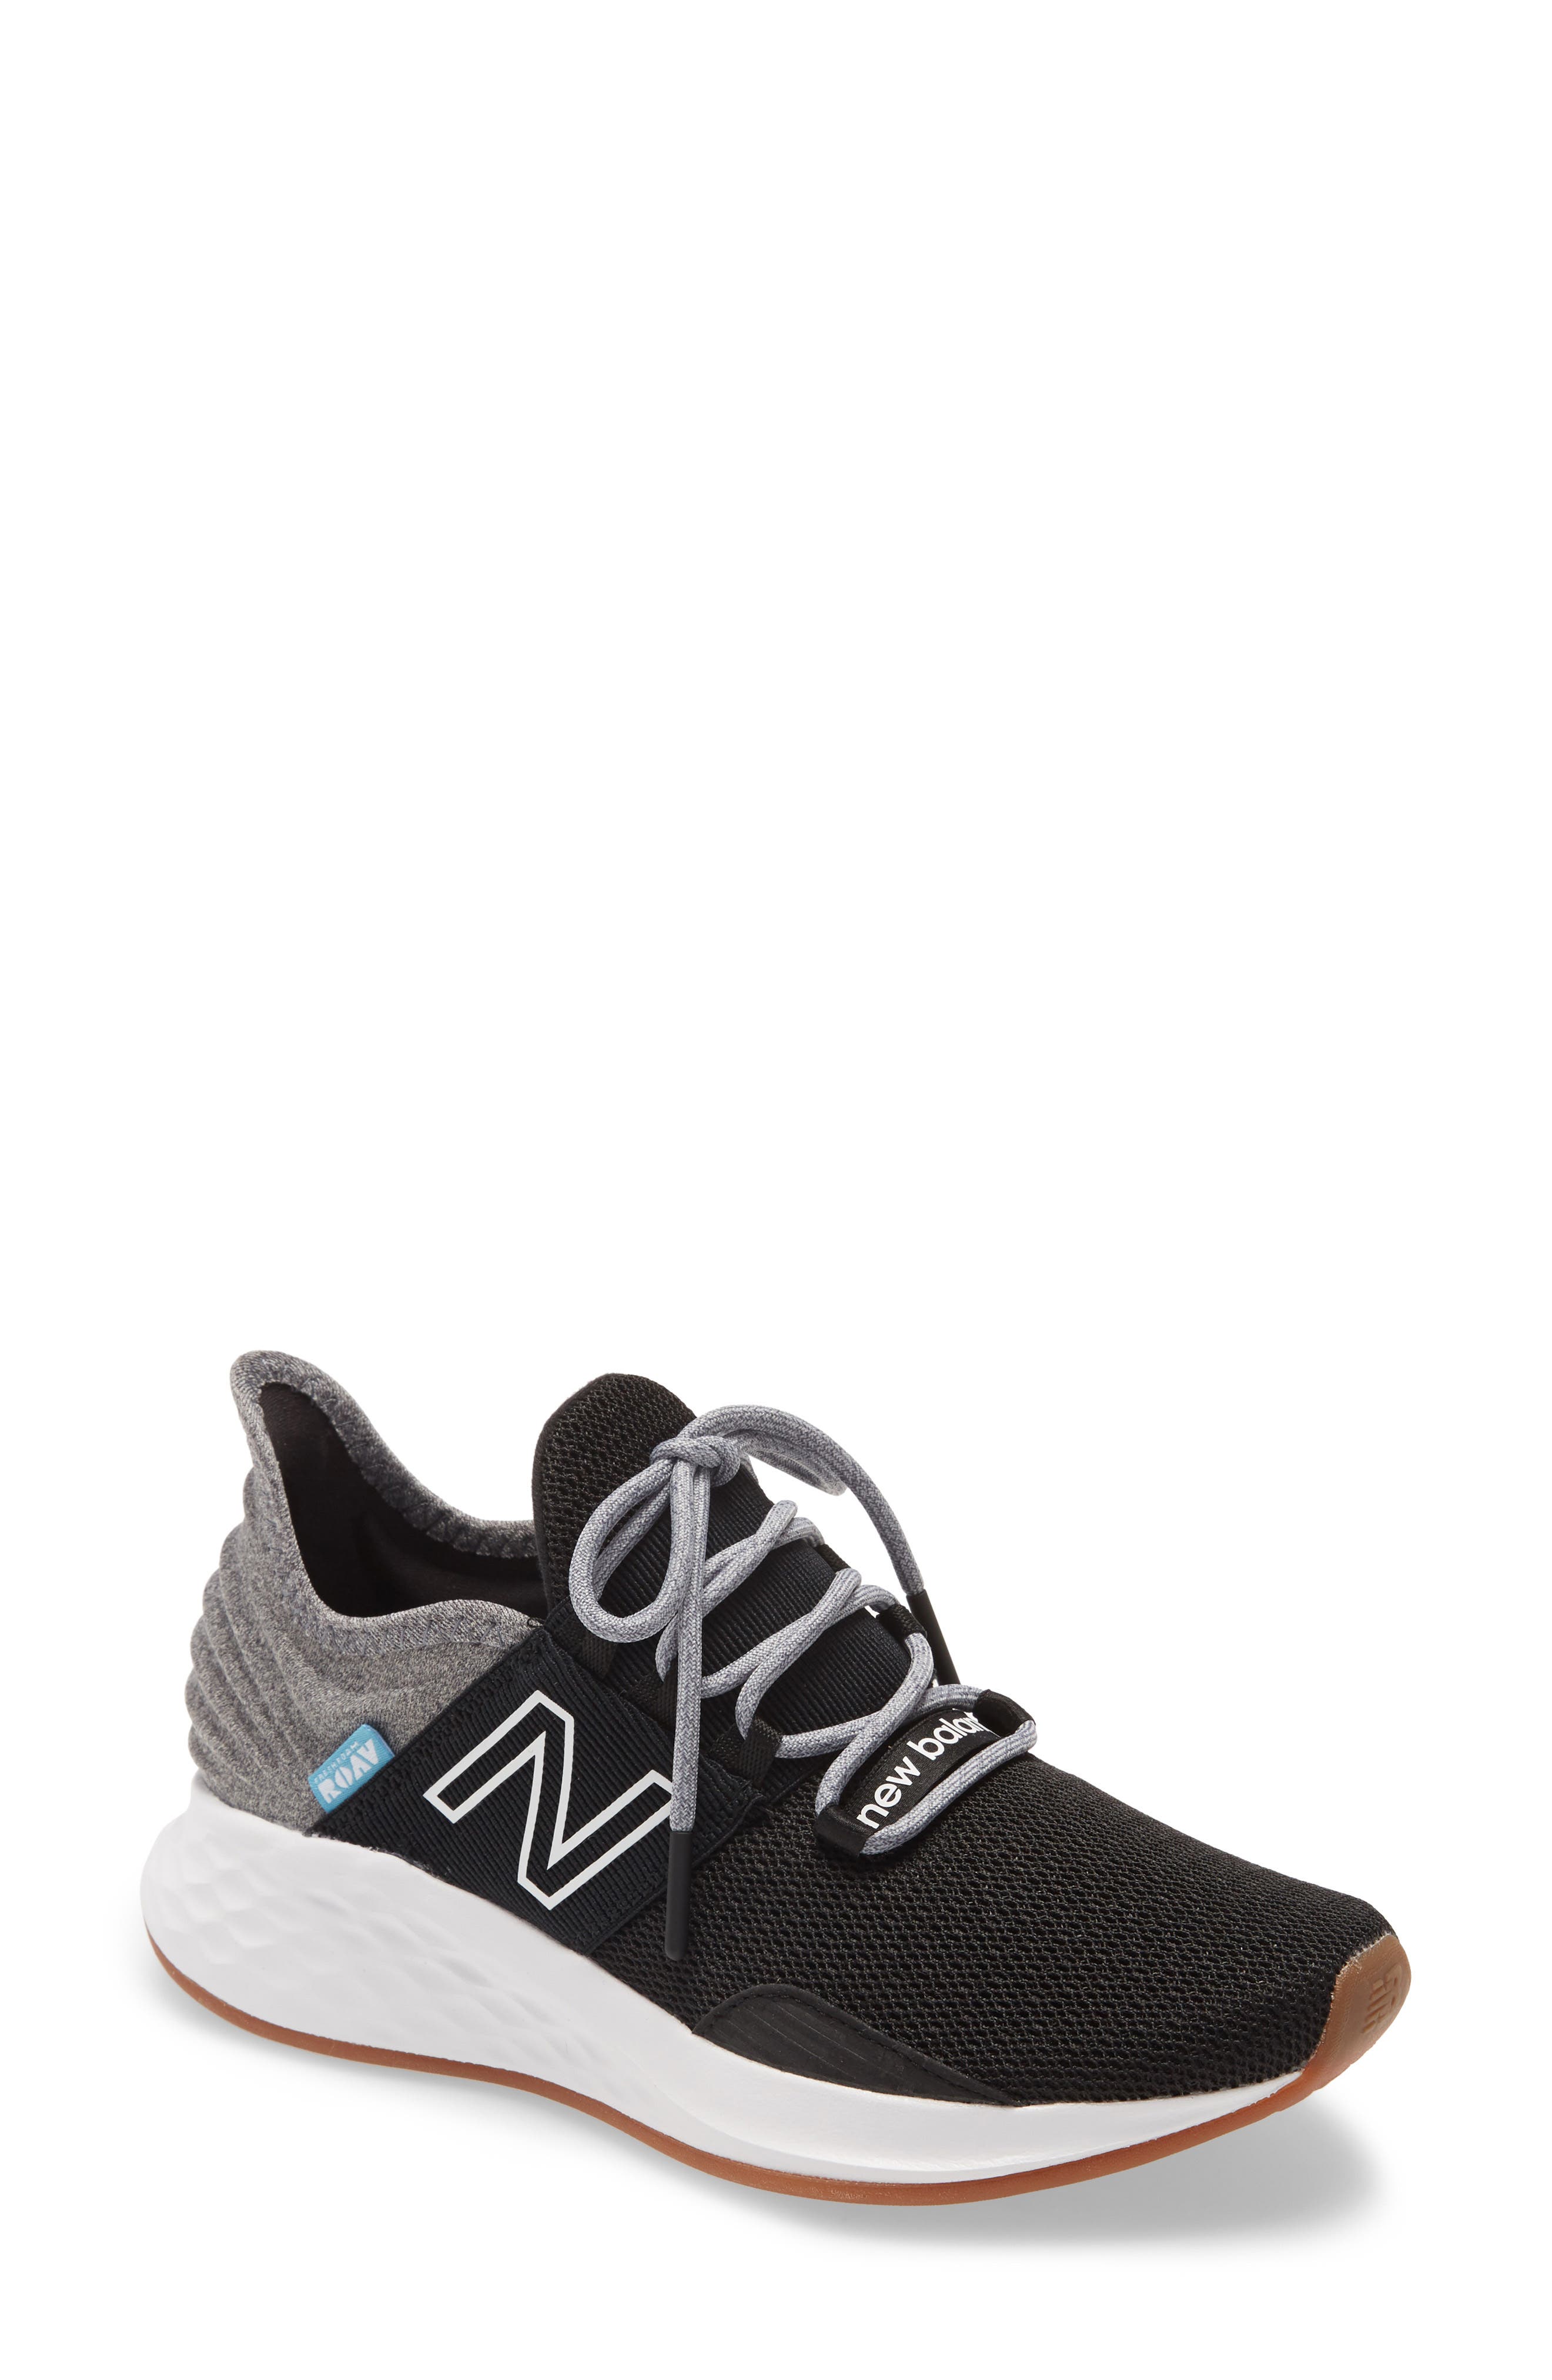 new balance sneakers black